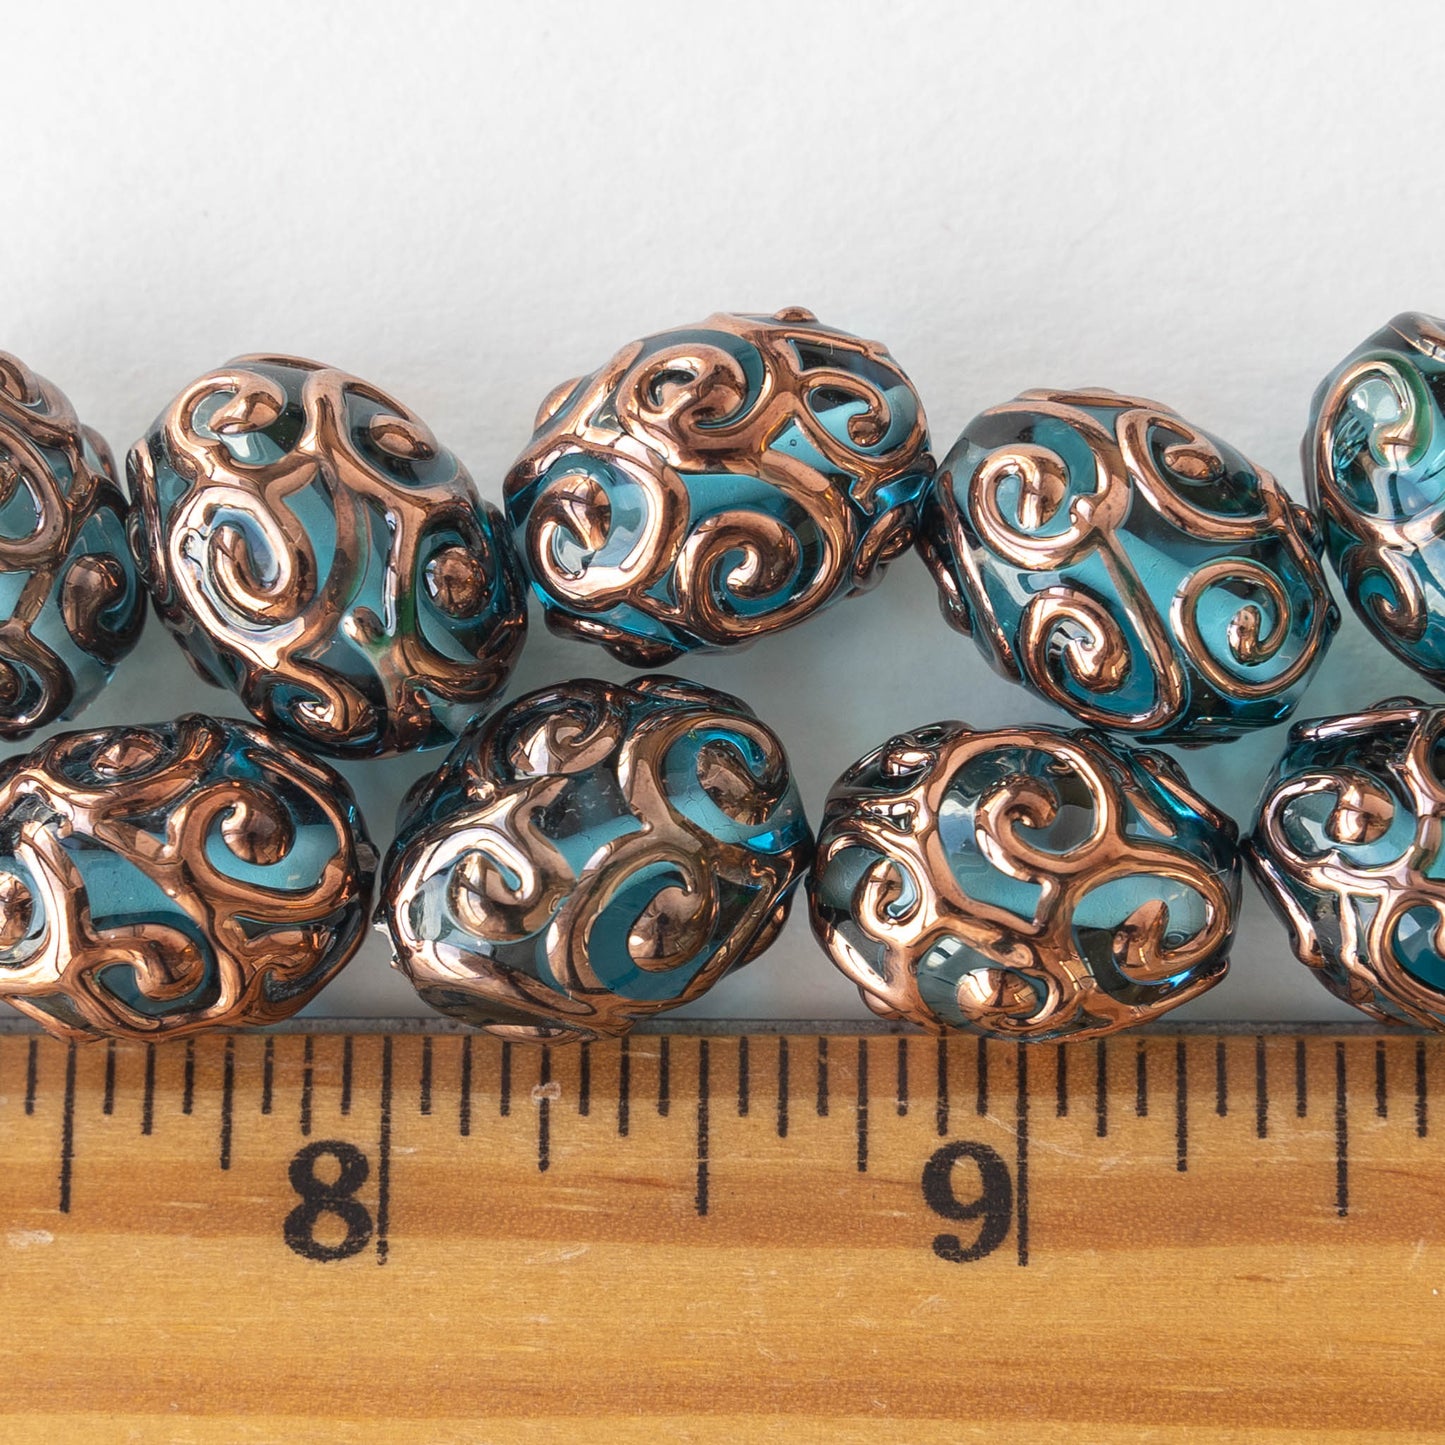 17x12mm Handmade Lampwork Beads - Aquamarine - 2, 4 or 8